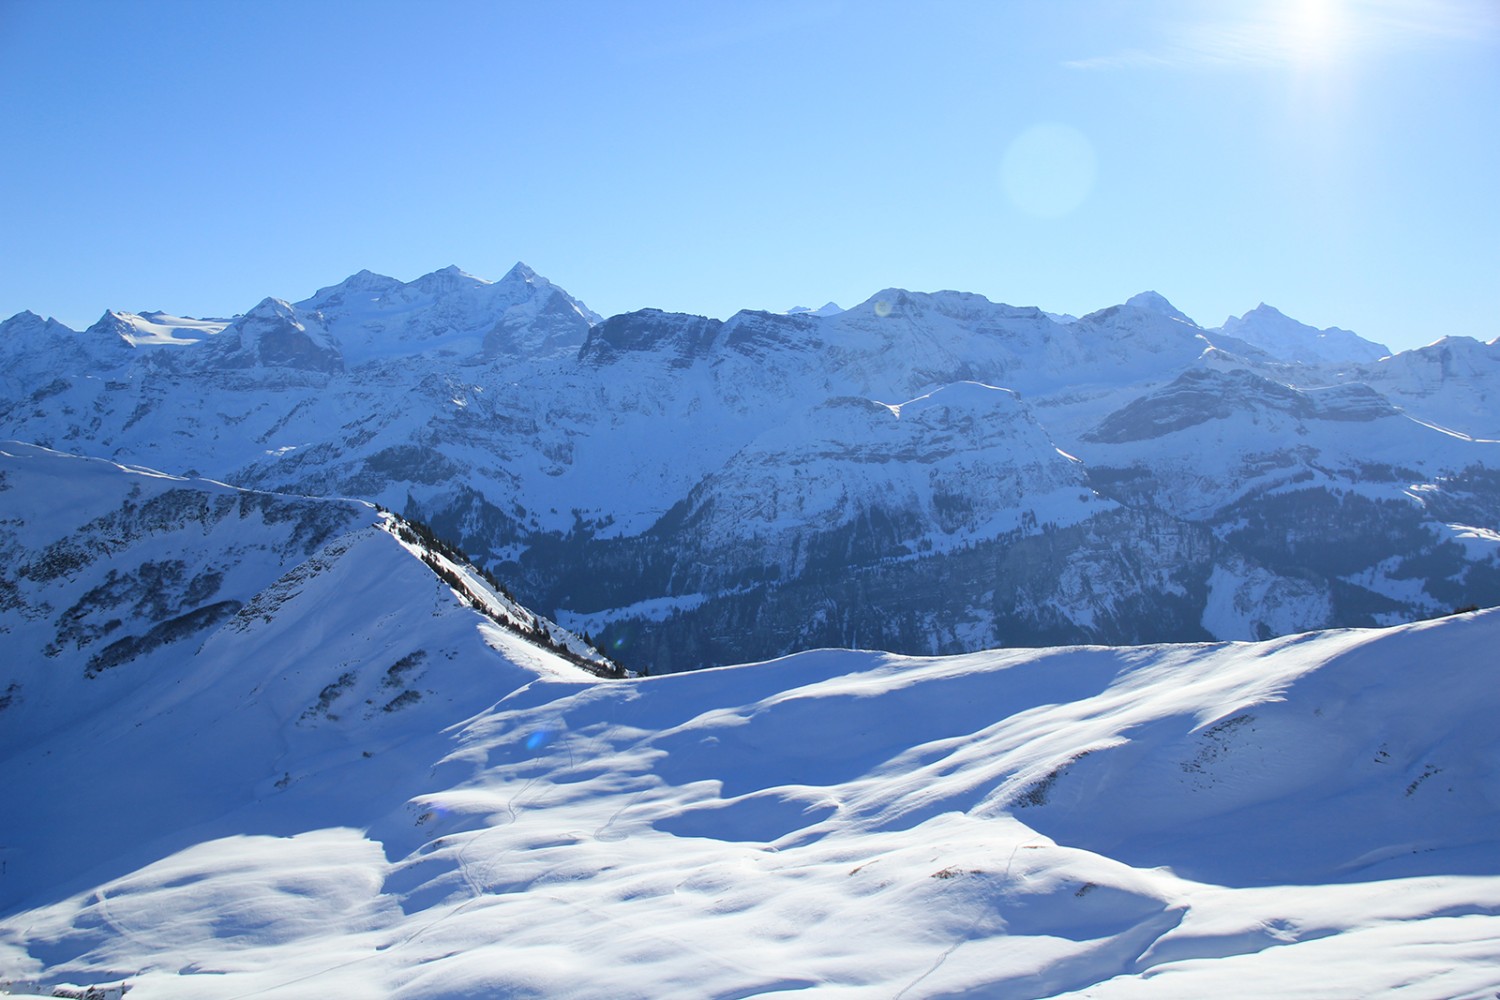 Auf dem Schönbüel blickt man in die hohen Berge des Berner Oberlands.